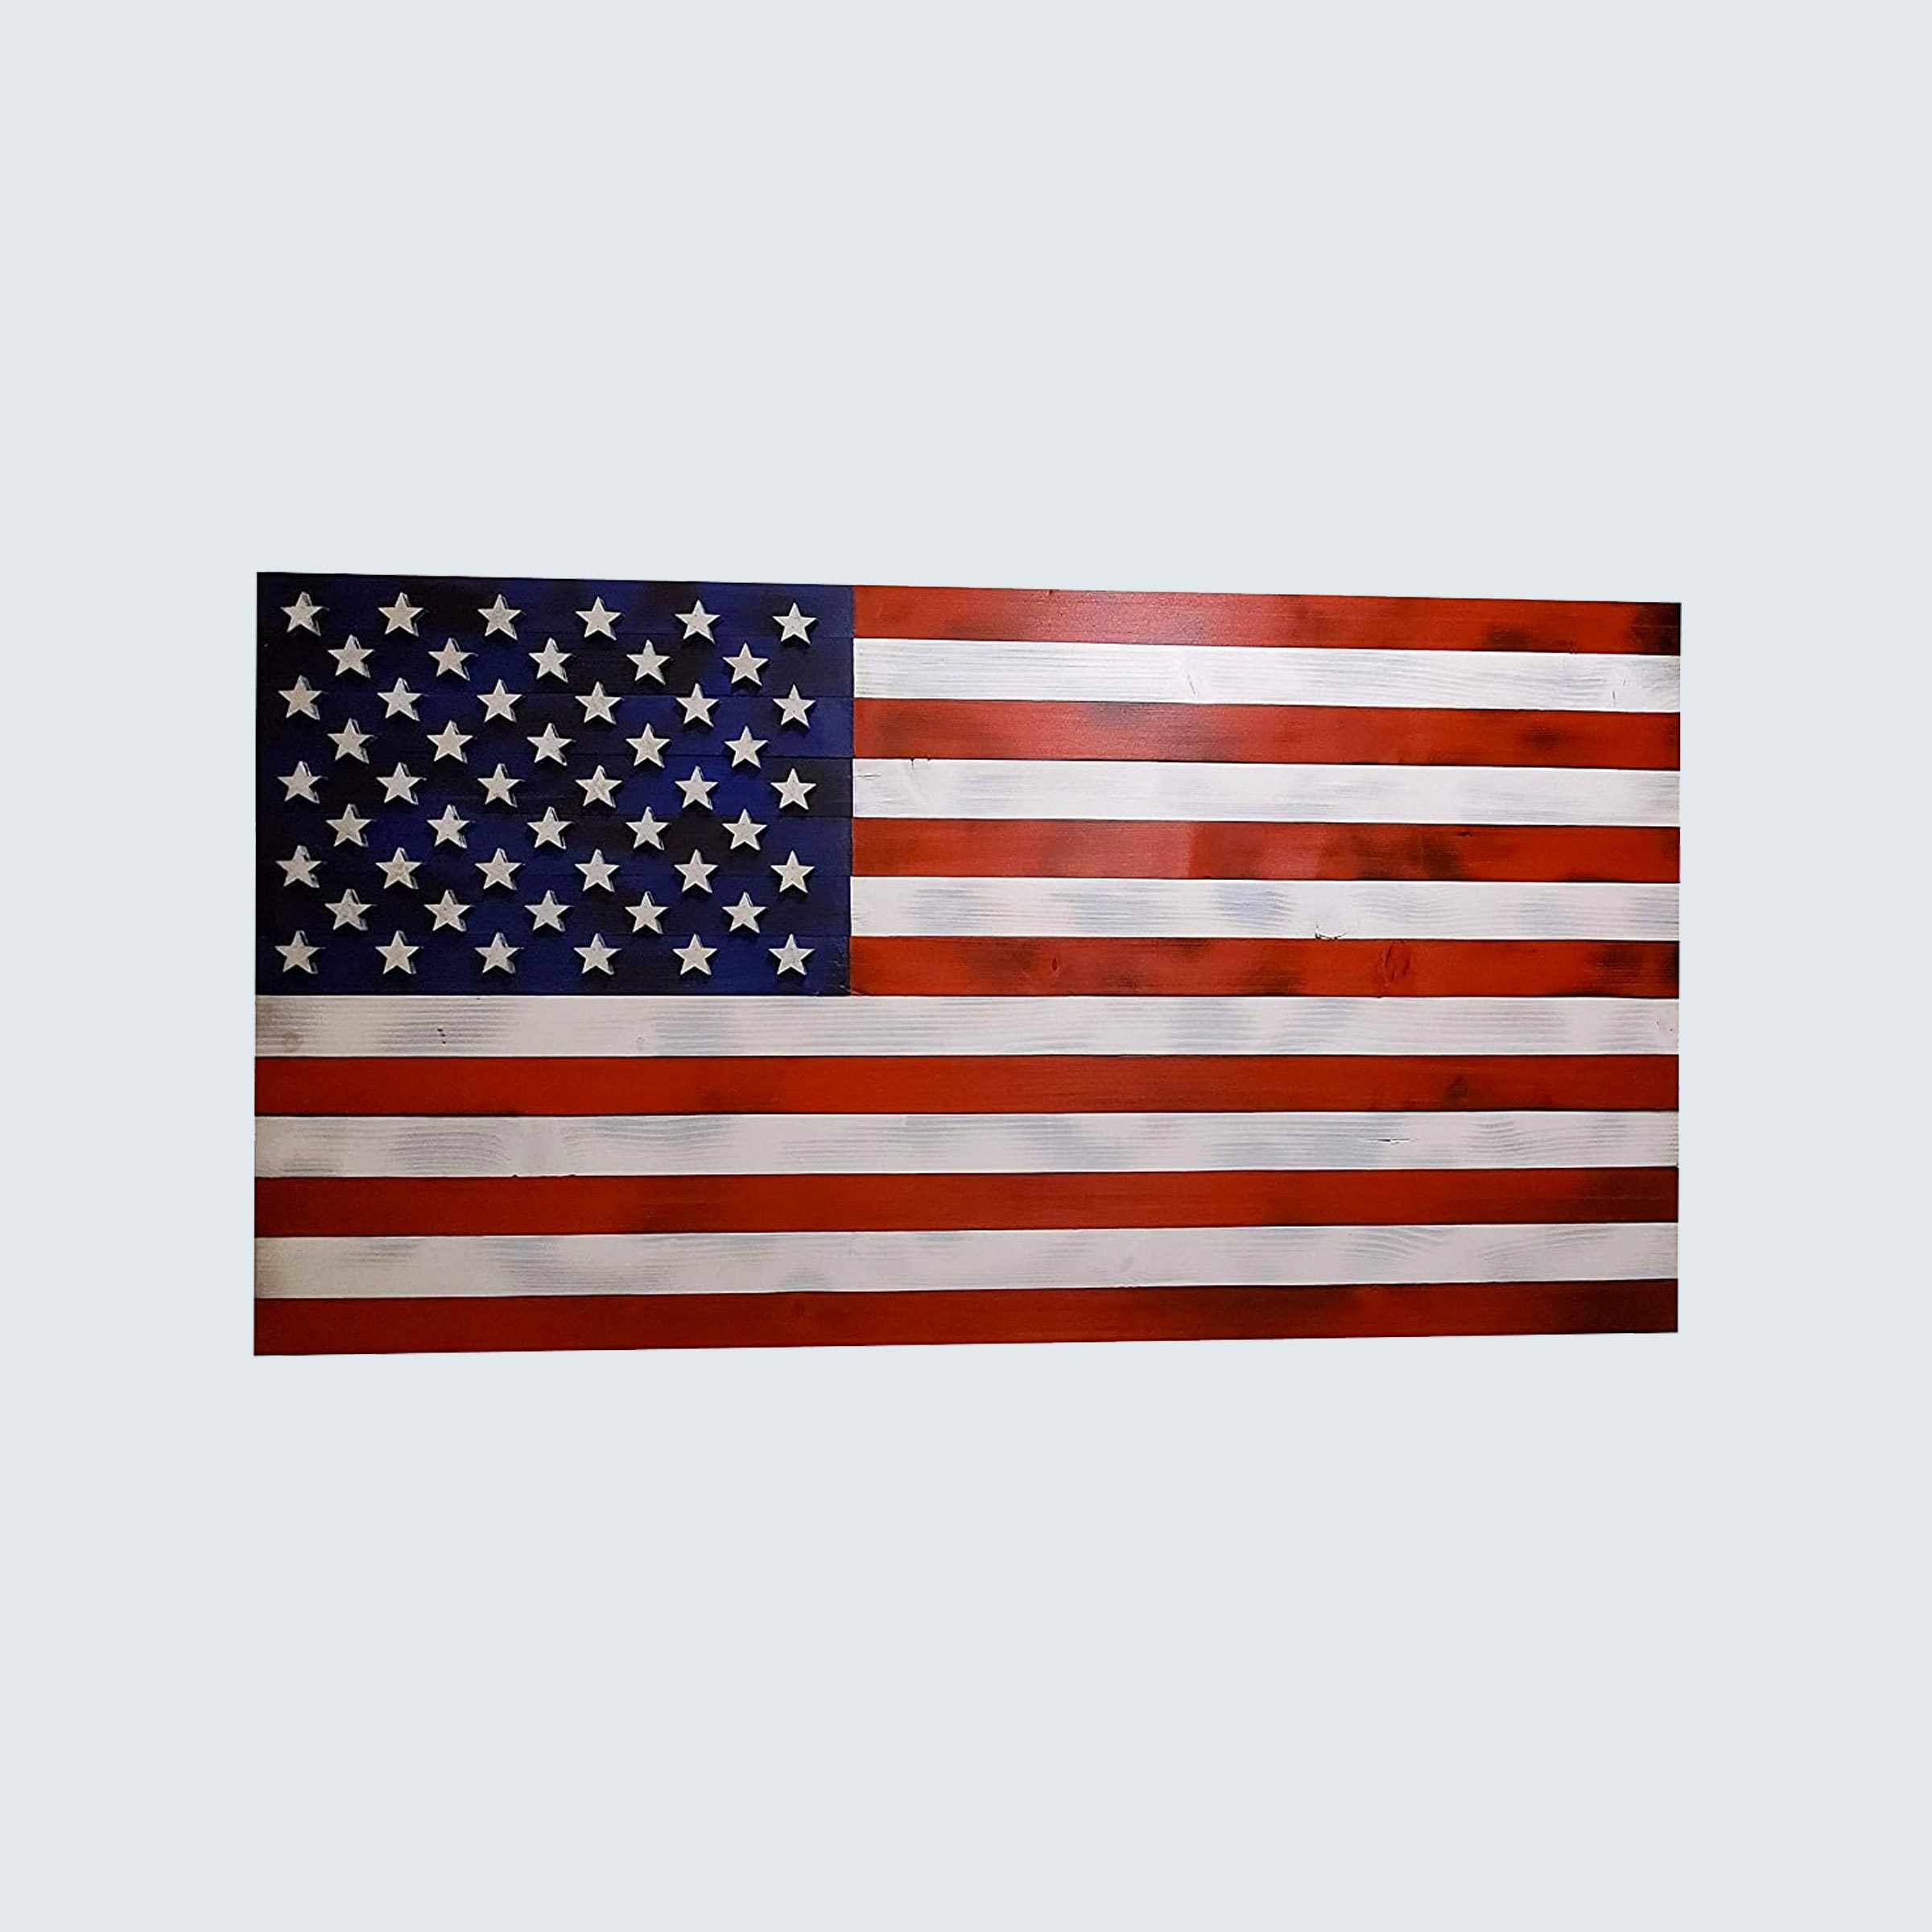 https://www.rd.com/wp-content/uploads/2020/06/01_Wooden-flag.jpg